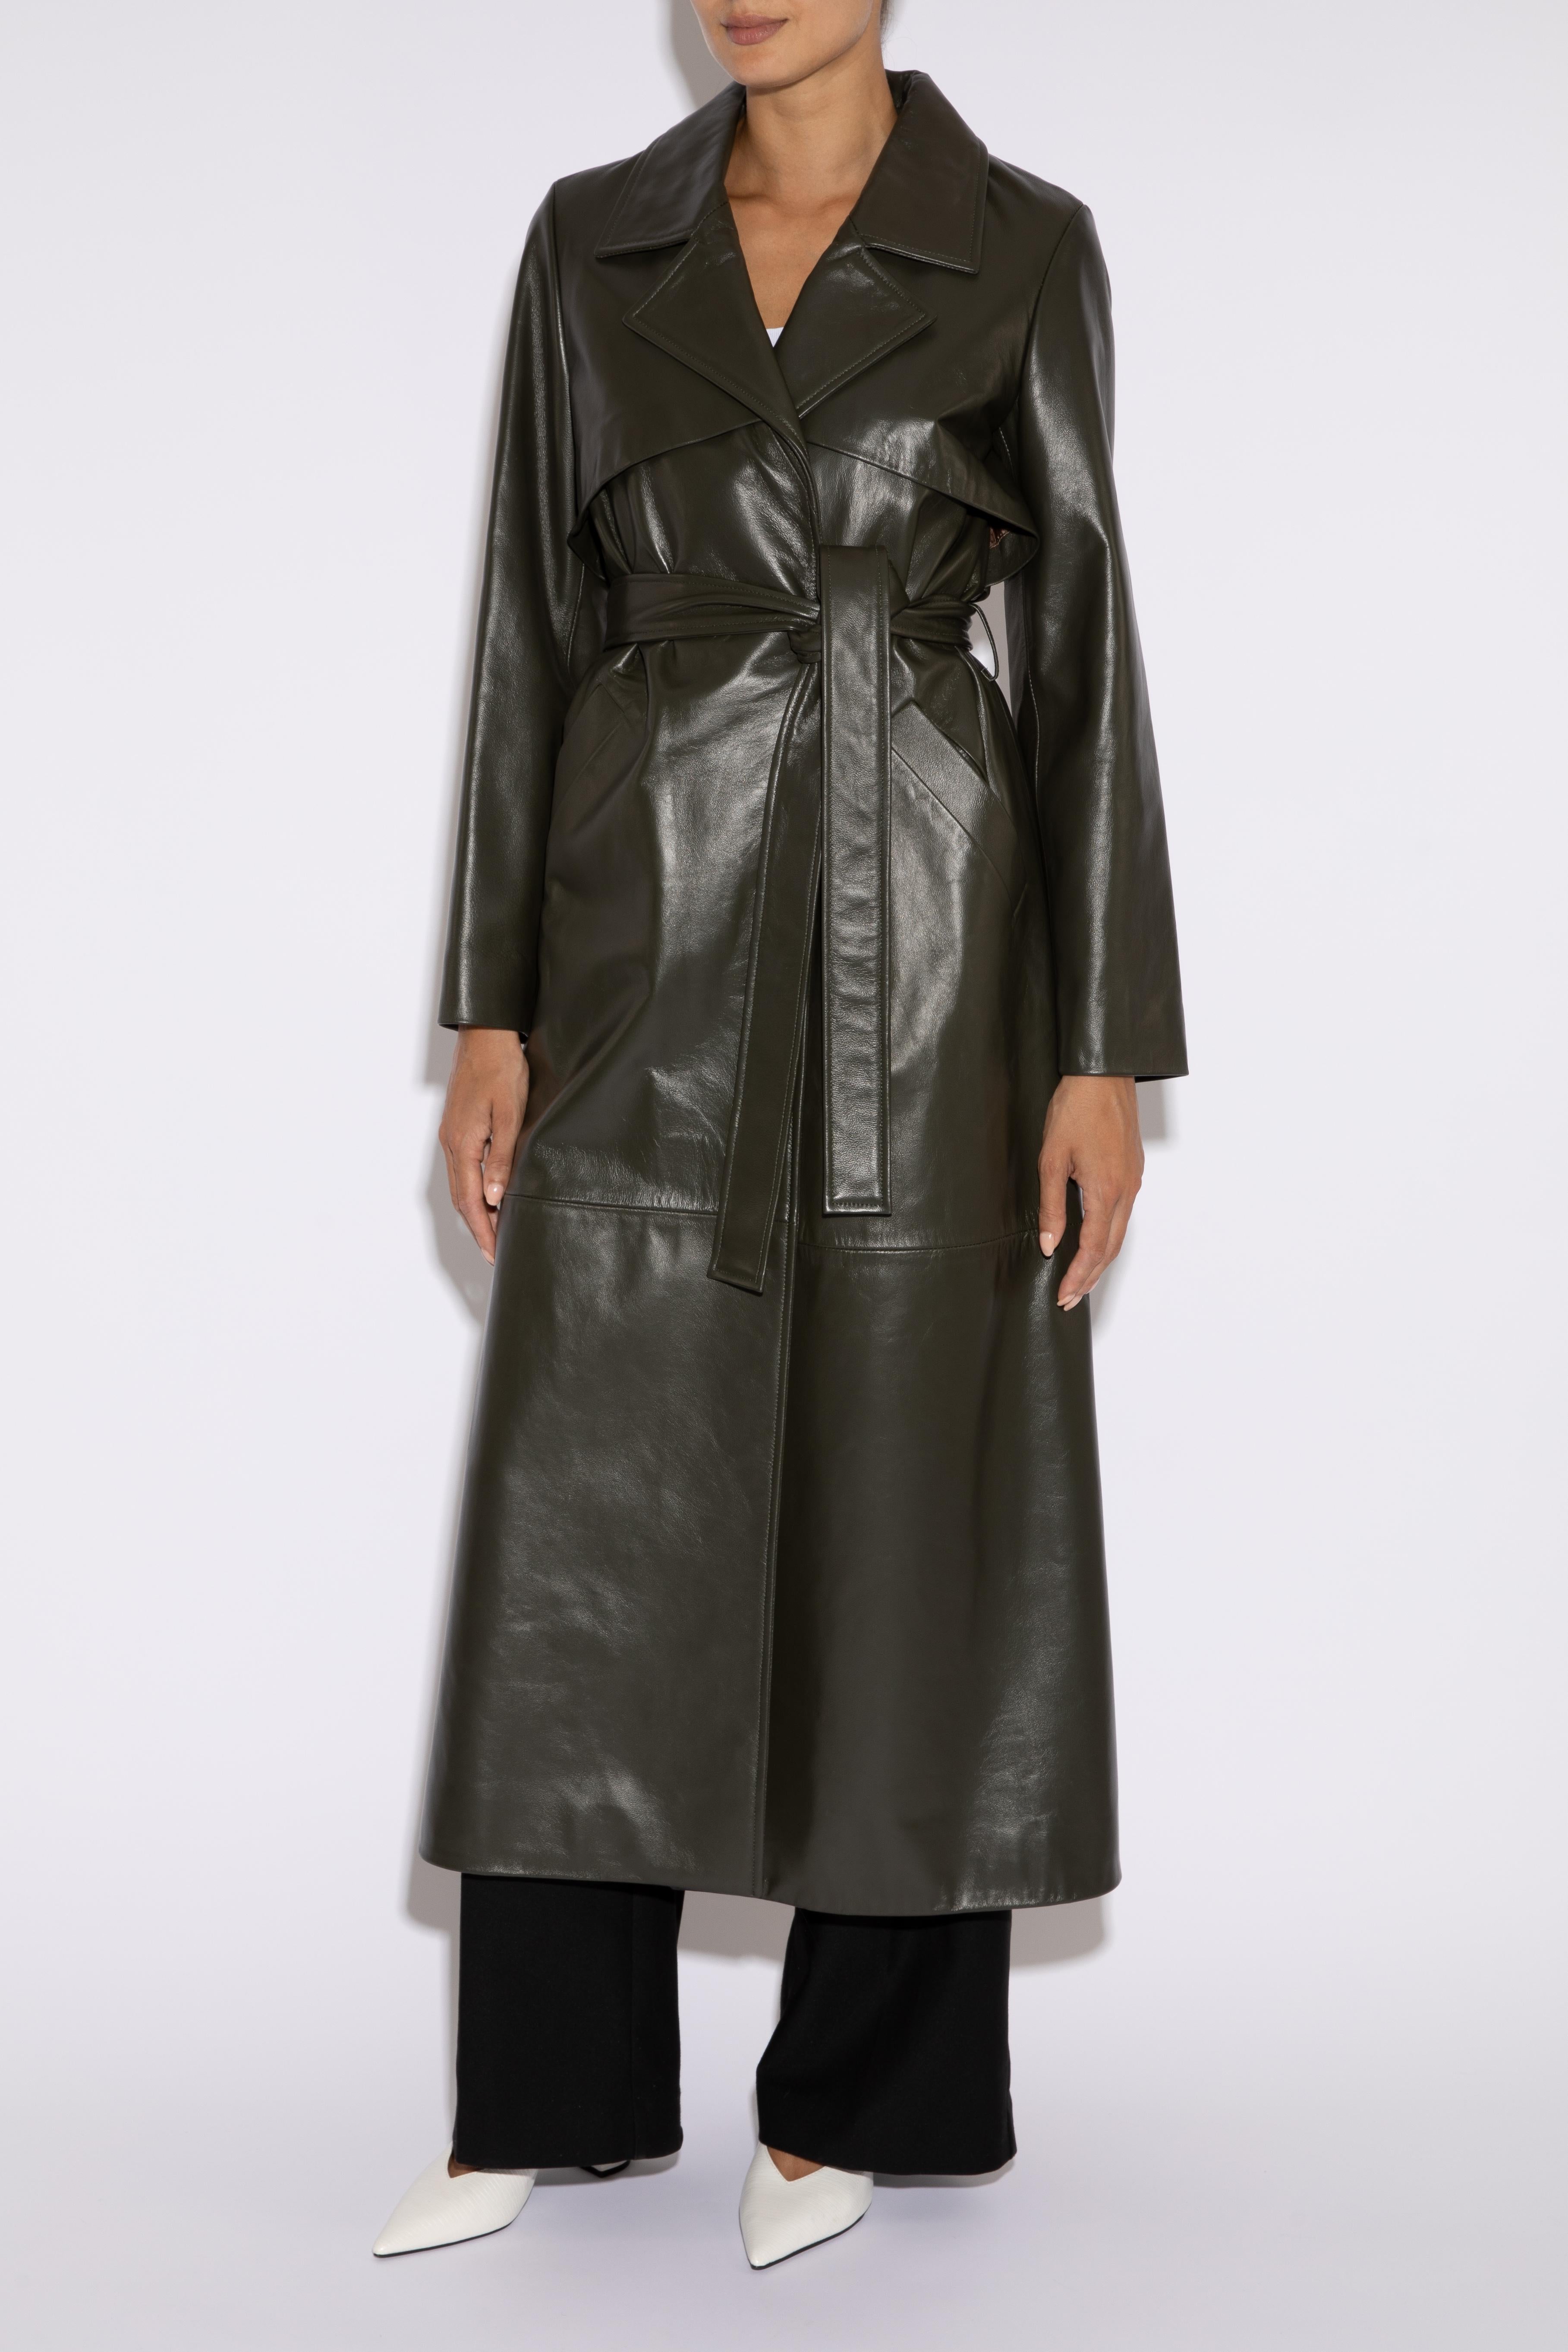 Women's Verheyen London Leather Trench Coat in Dark Khaki Green - Size uk 16 For Sale